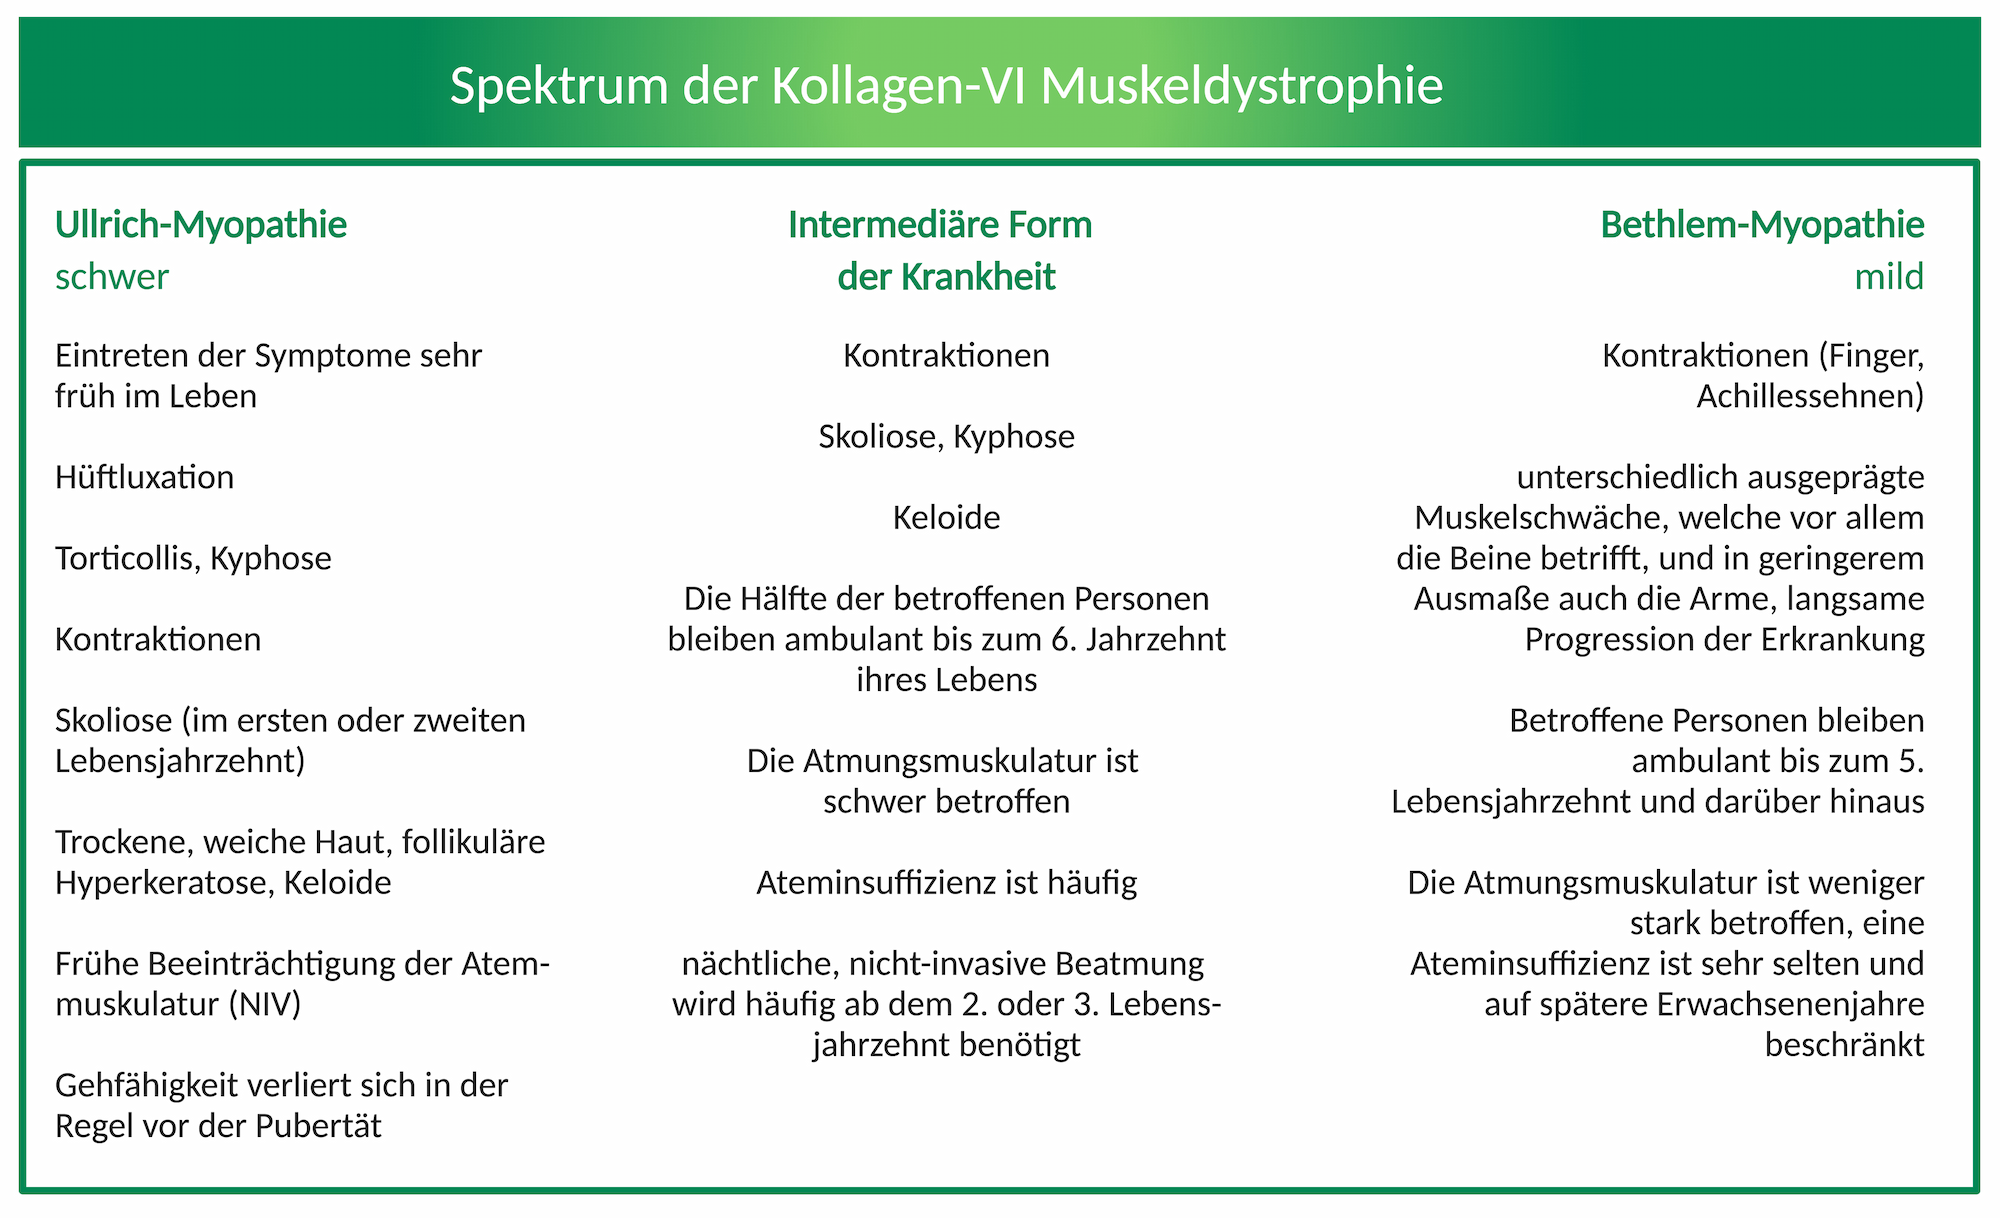 Tabelle: Spektrum der angeborenen Kollagen-VI Muskeldystrophie